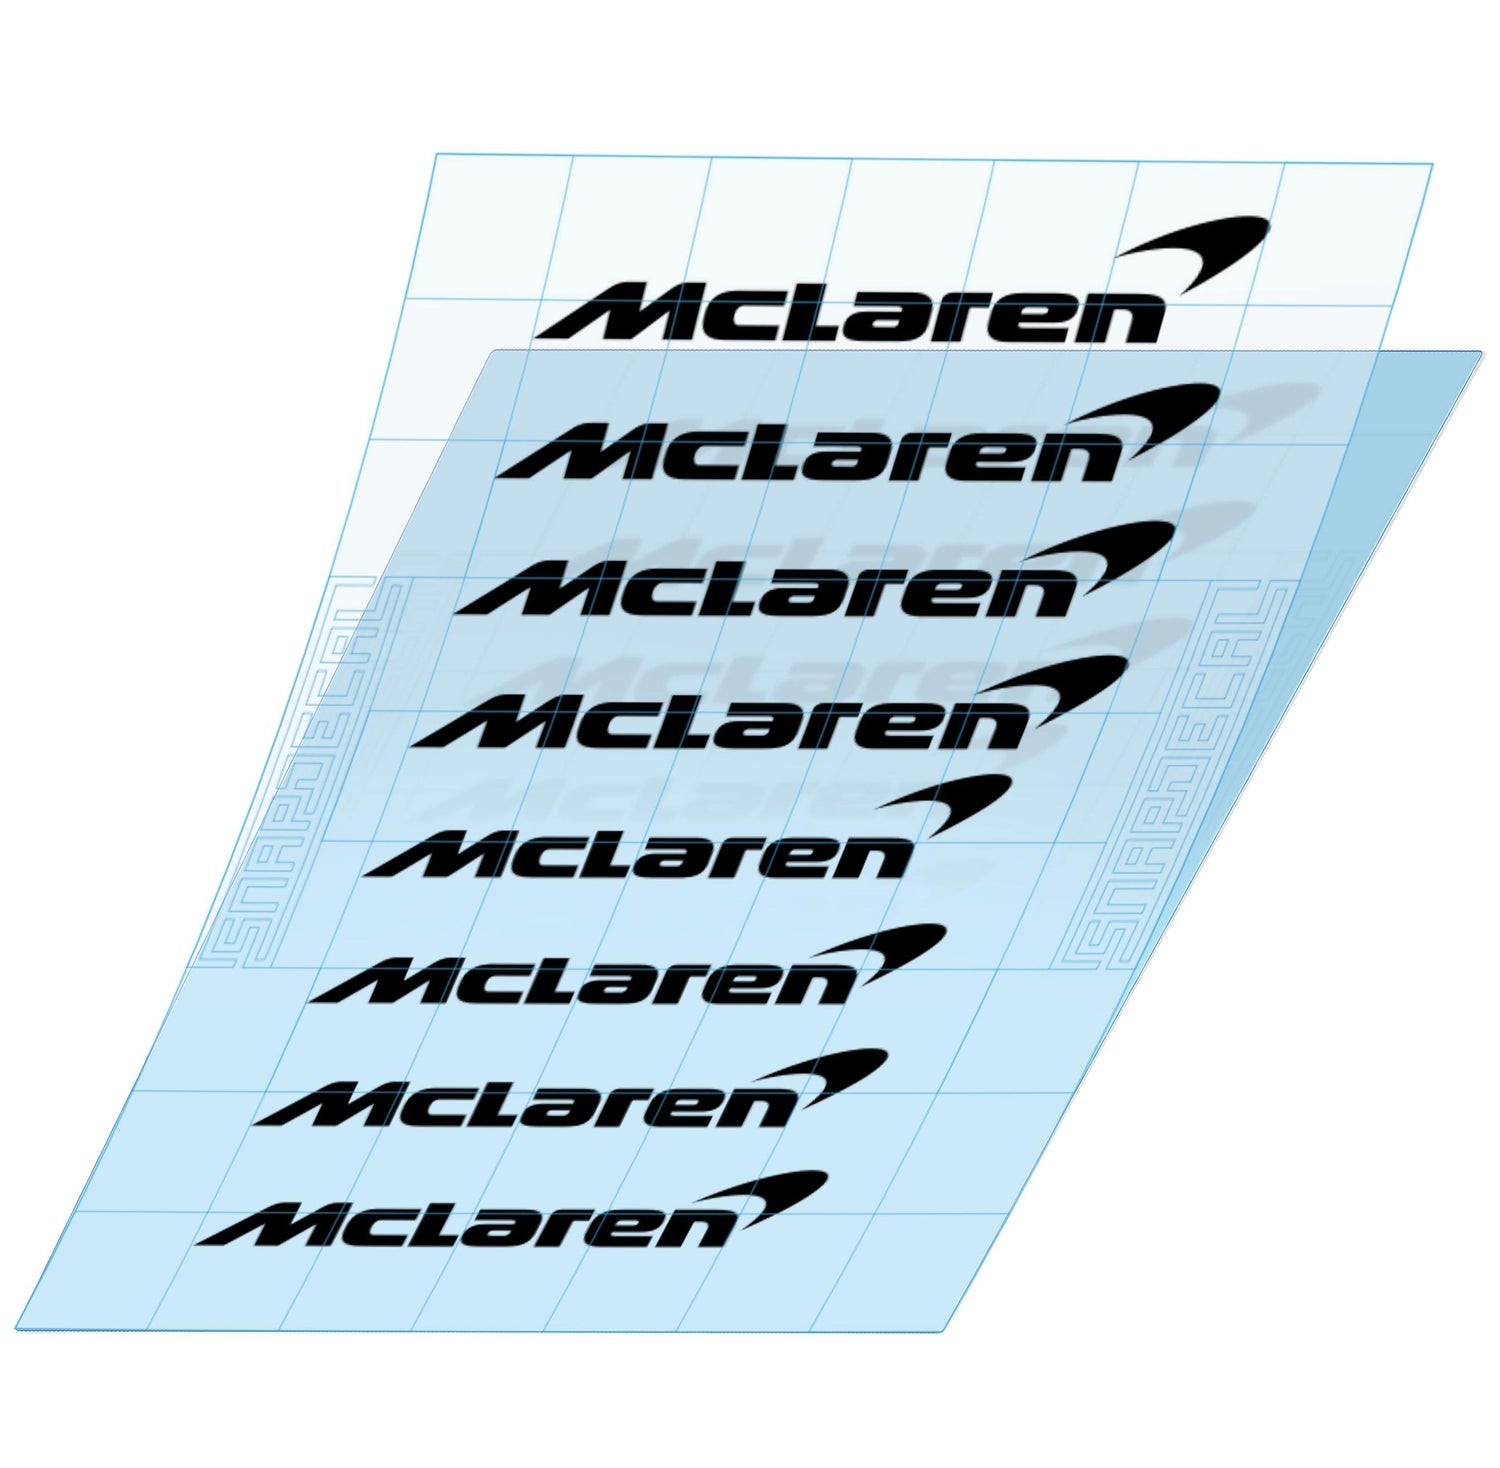 8 McLaren Brake Caliper Decals freeshipping - Snap Decal